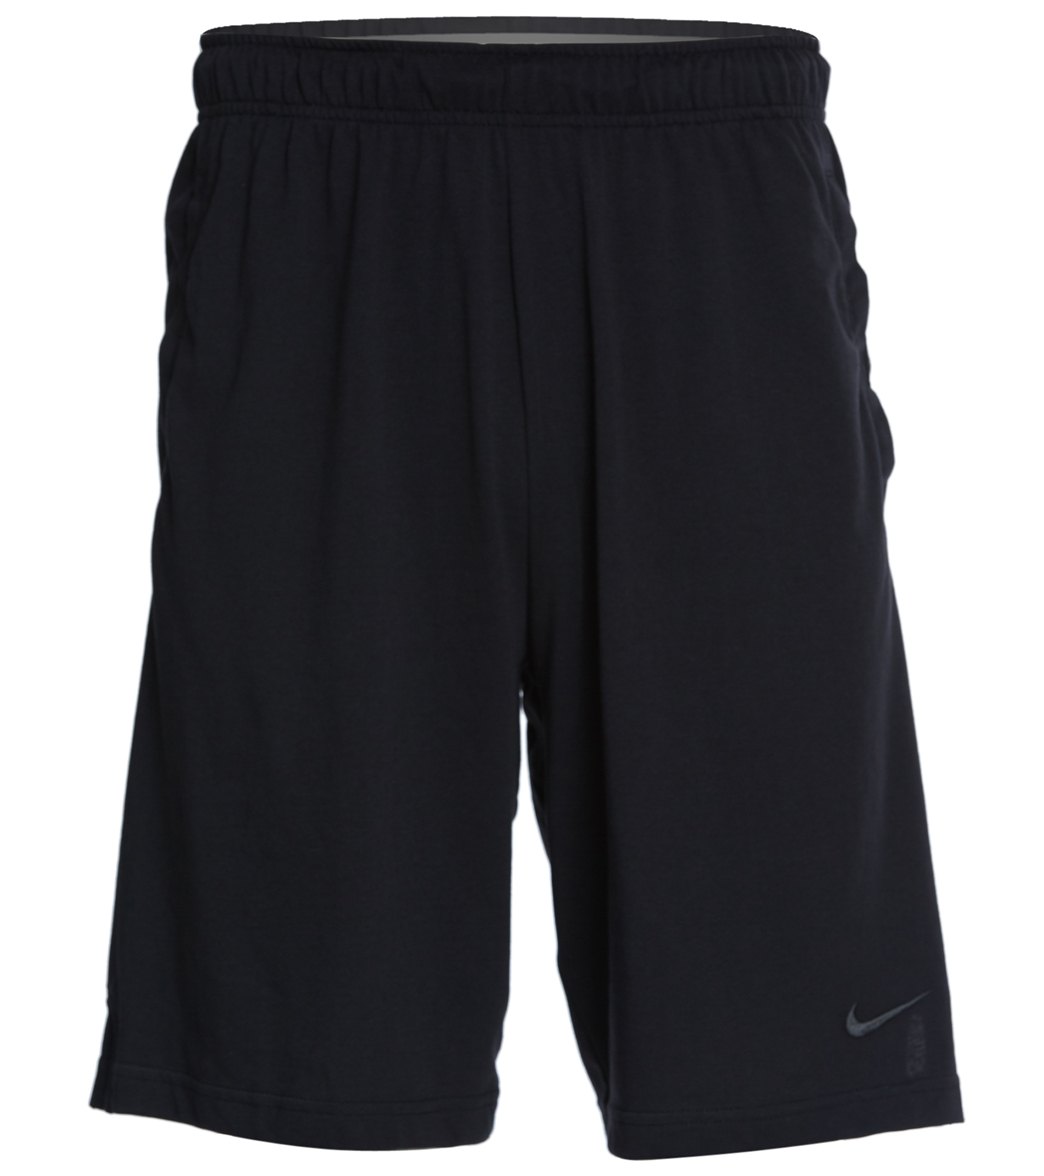 Nike Men's Training Short - Black Small Size Small Cotton/Polyester - Swimoutlet.com